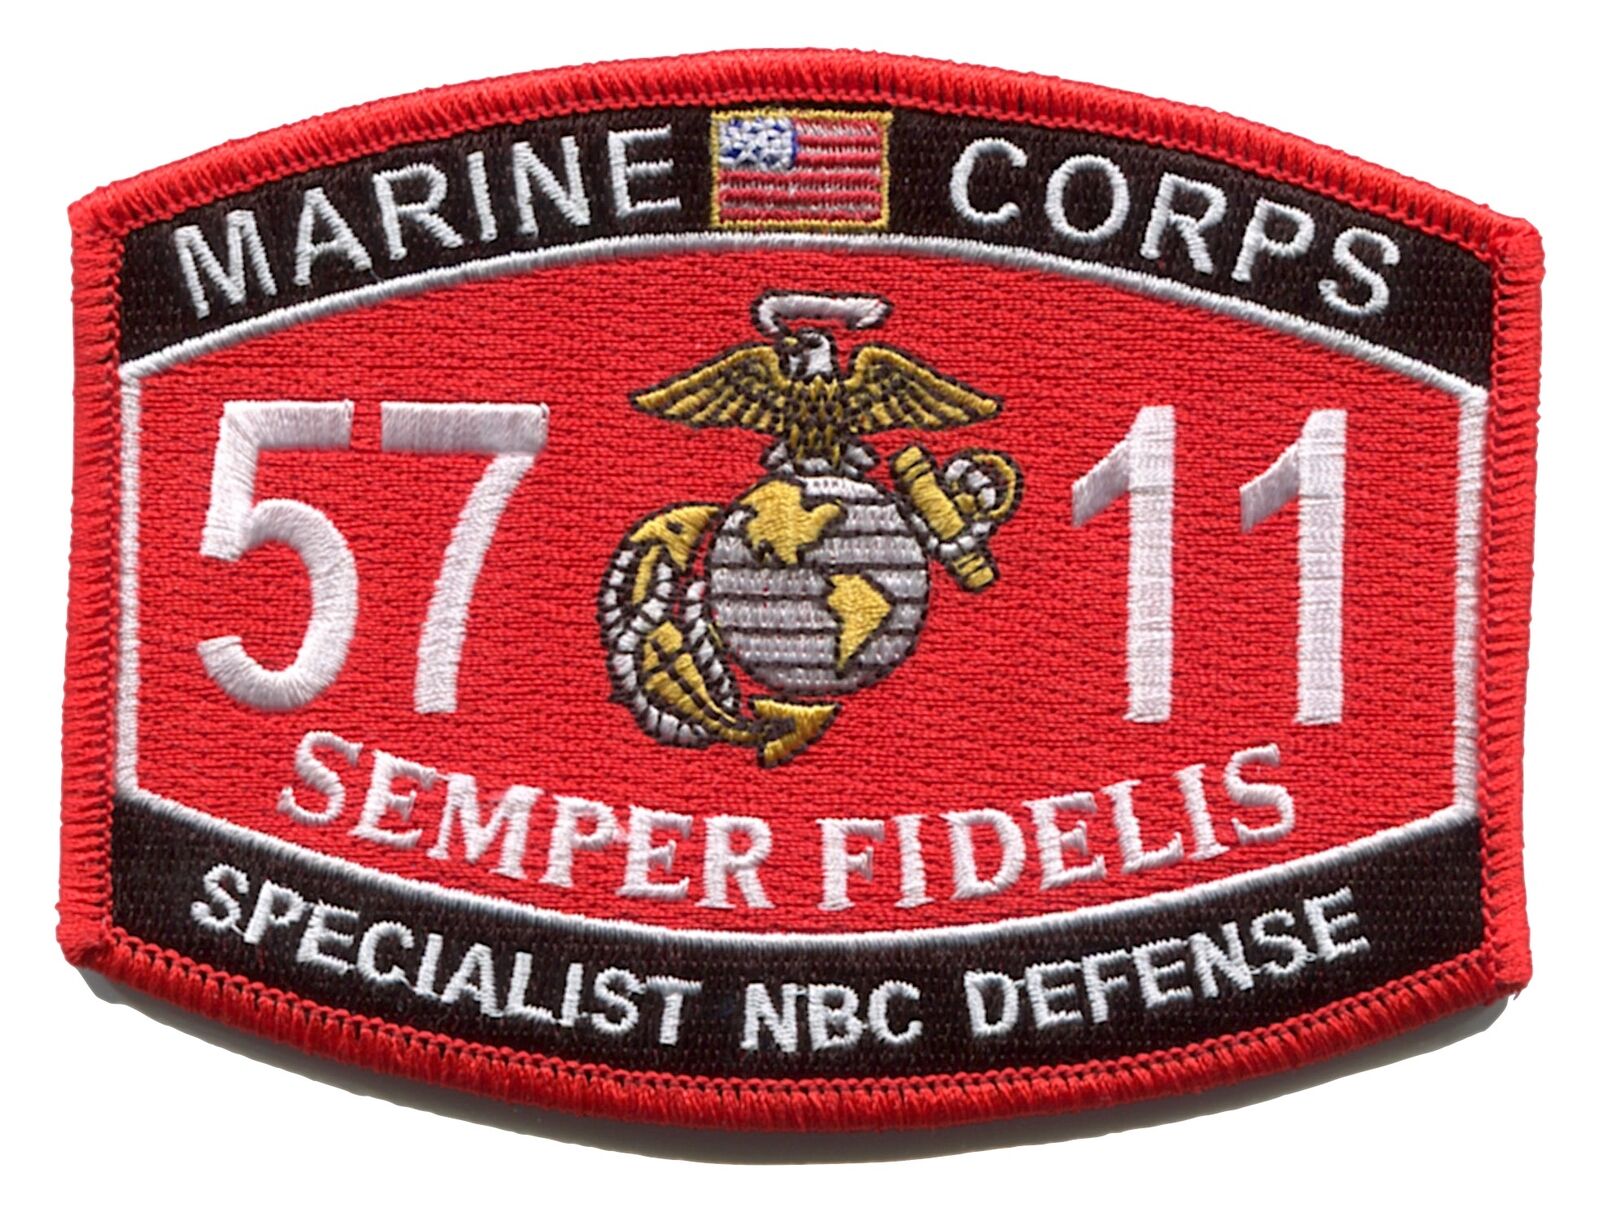 5711 Specialist NBC Defense MOS Patch